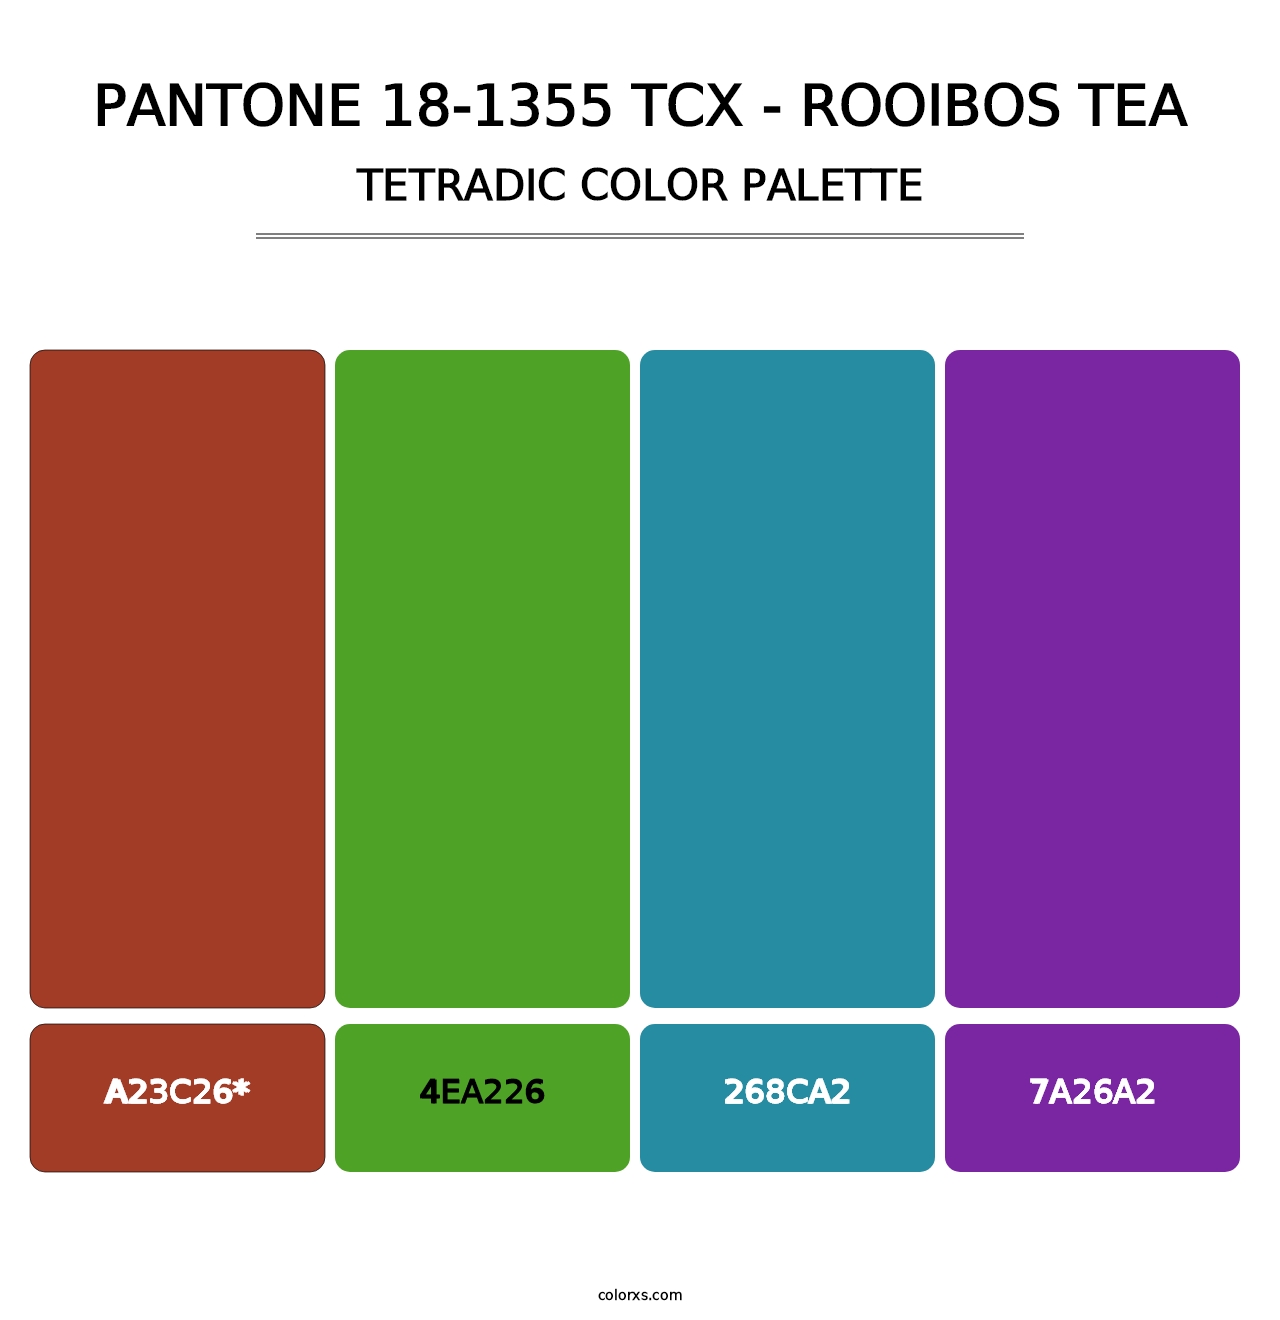 PANTONE 18-1355 TCX - Rooibos Tea - Tetradic Color Palette